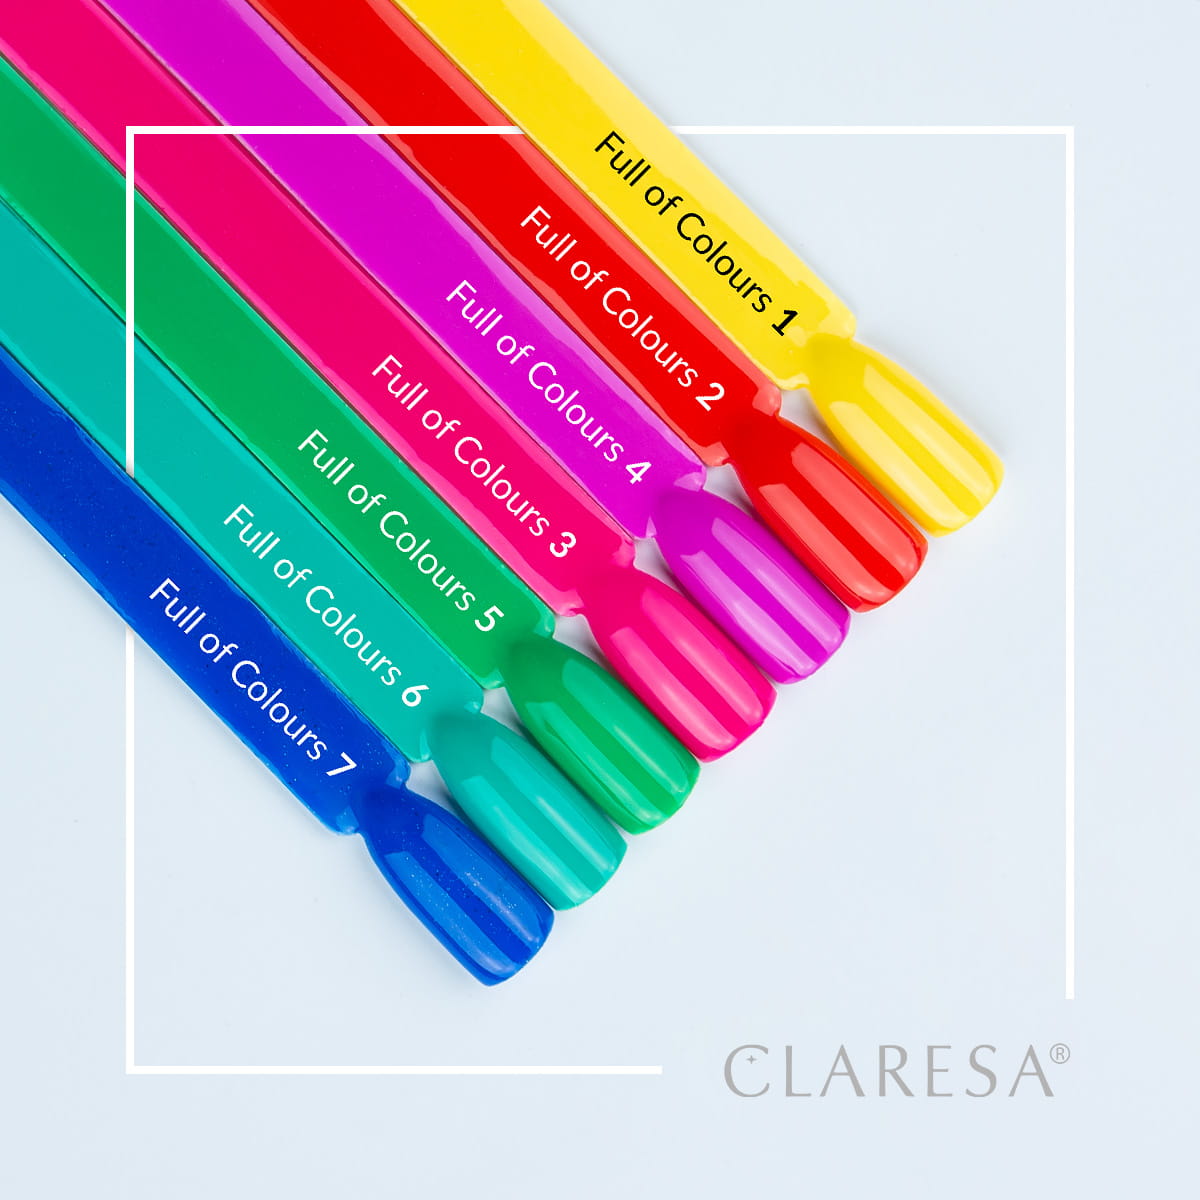 CLARESA Full of colours Hybrid Polish 2 -5g